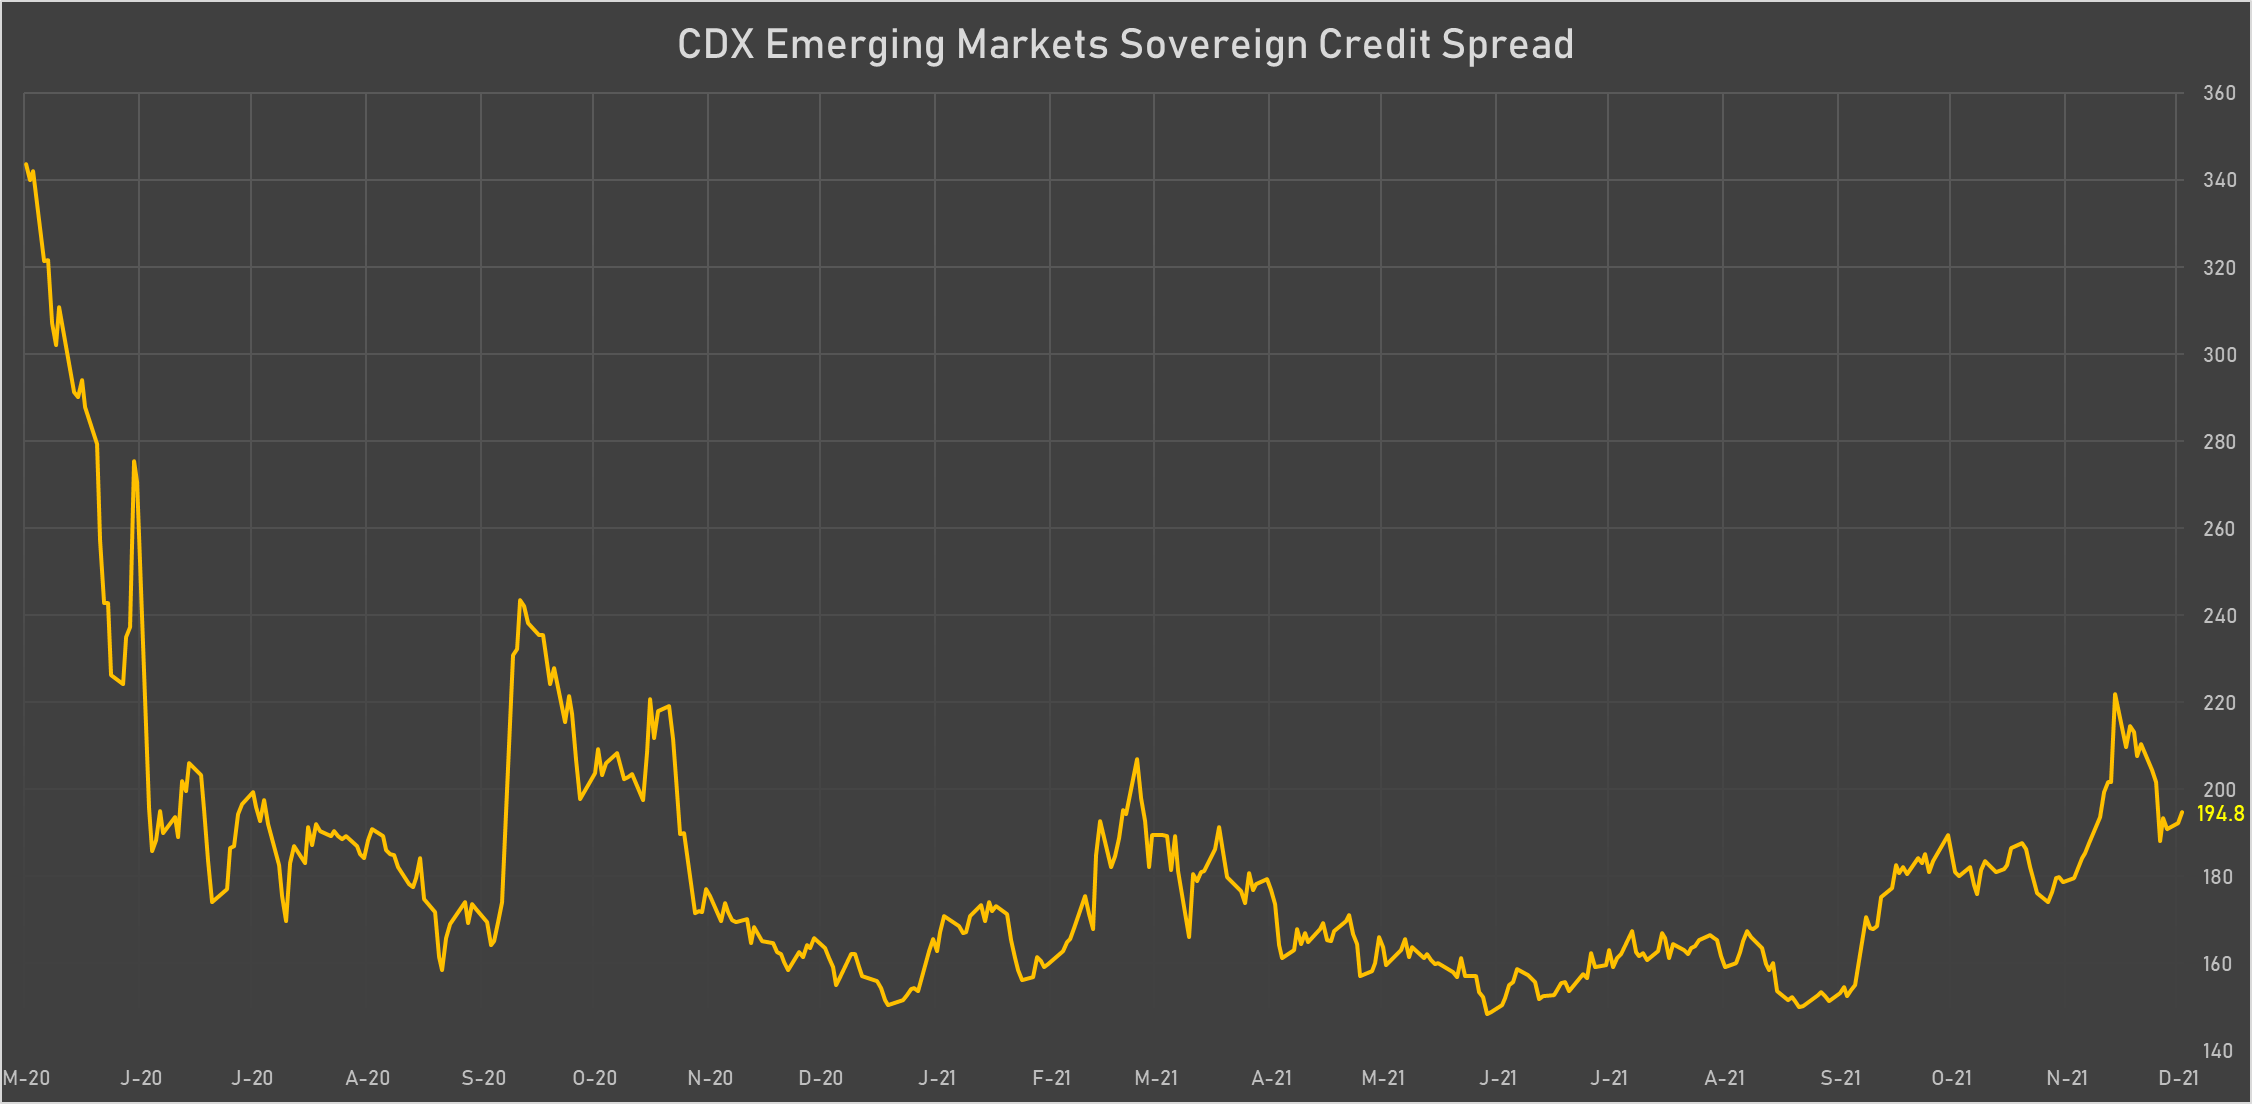 CDX EM Sovereign Credit Spread | Sources:  phipost.com, Refinitiv data